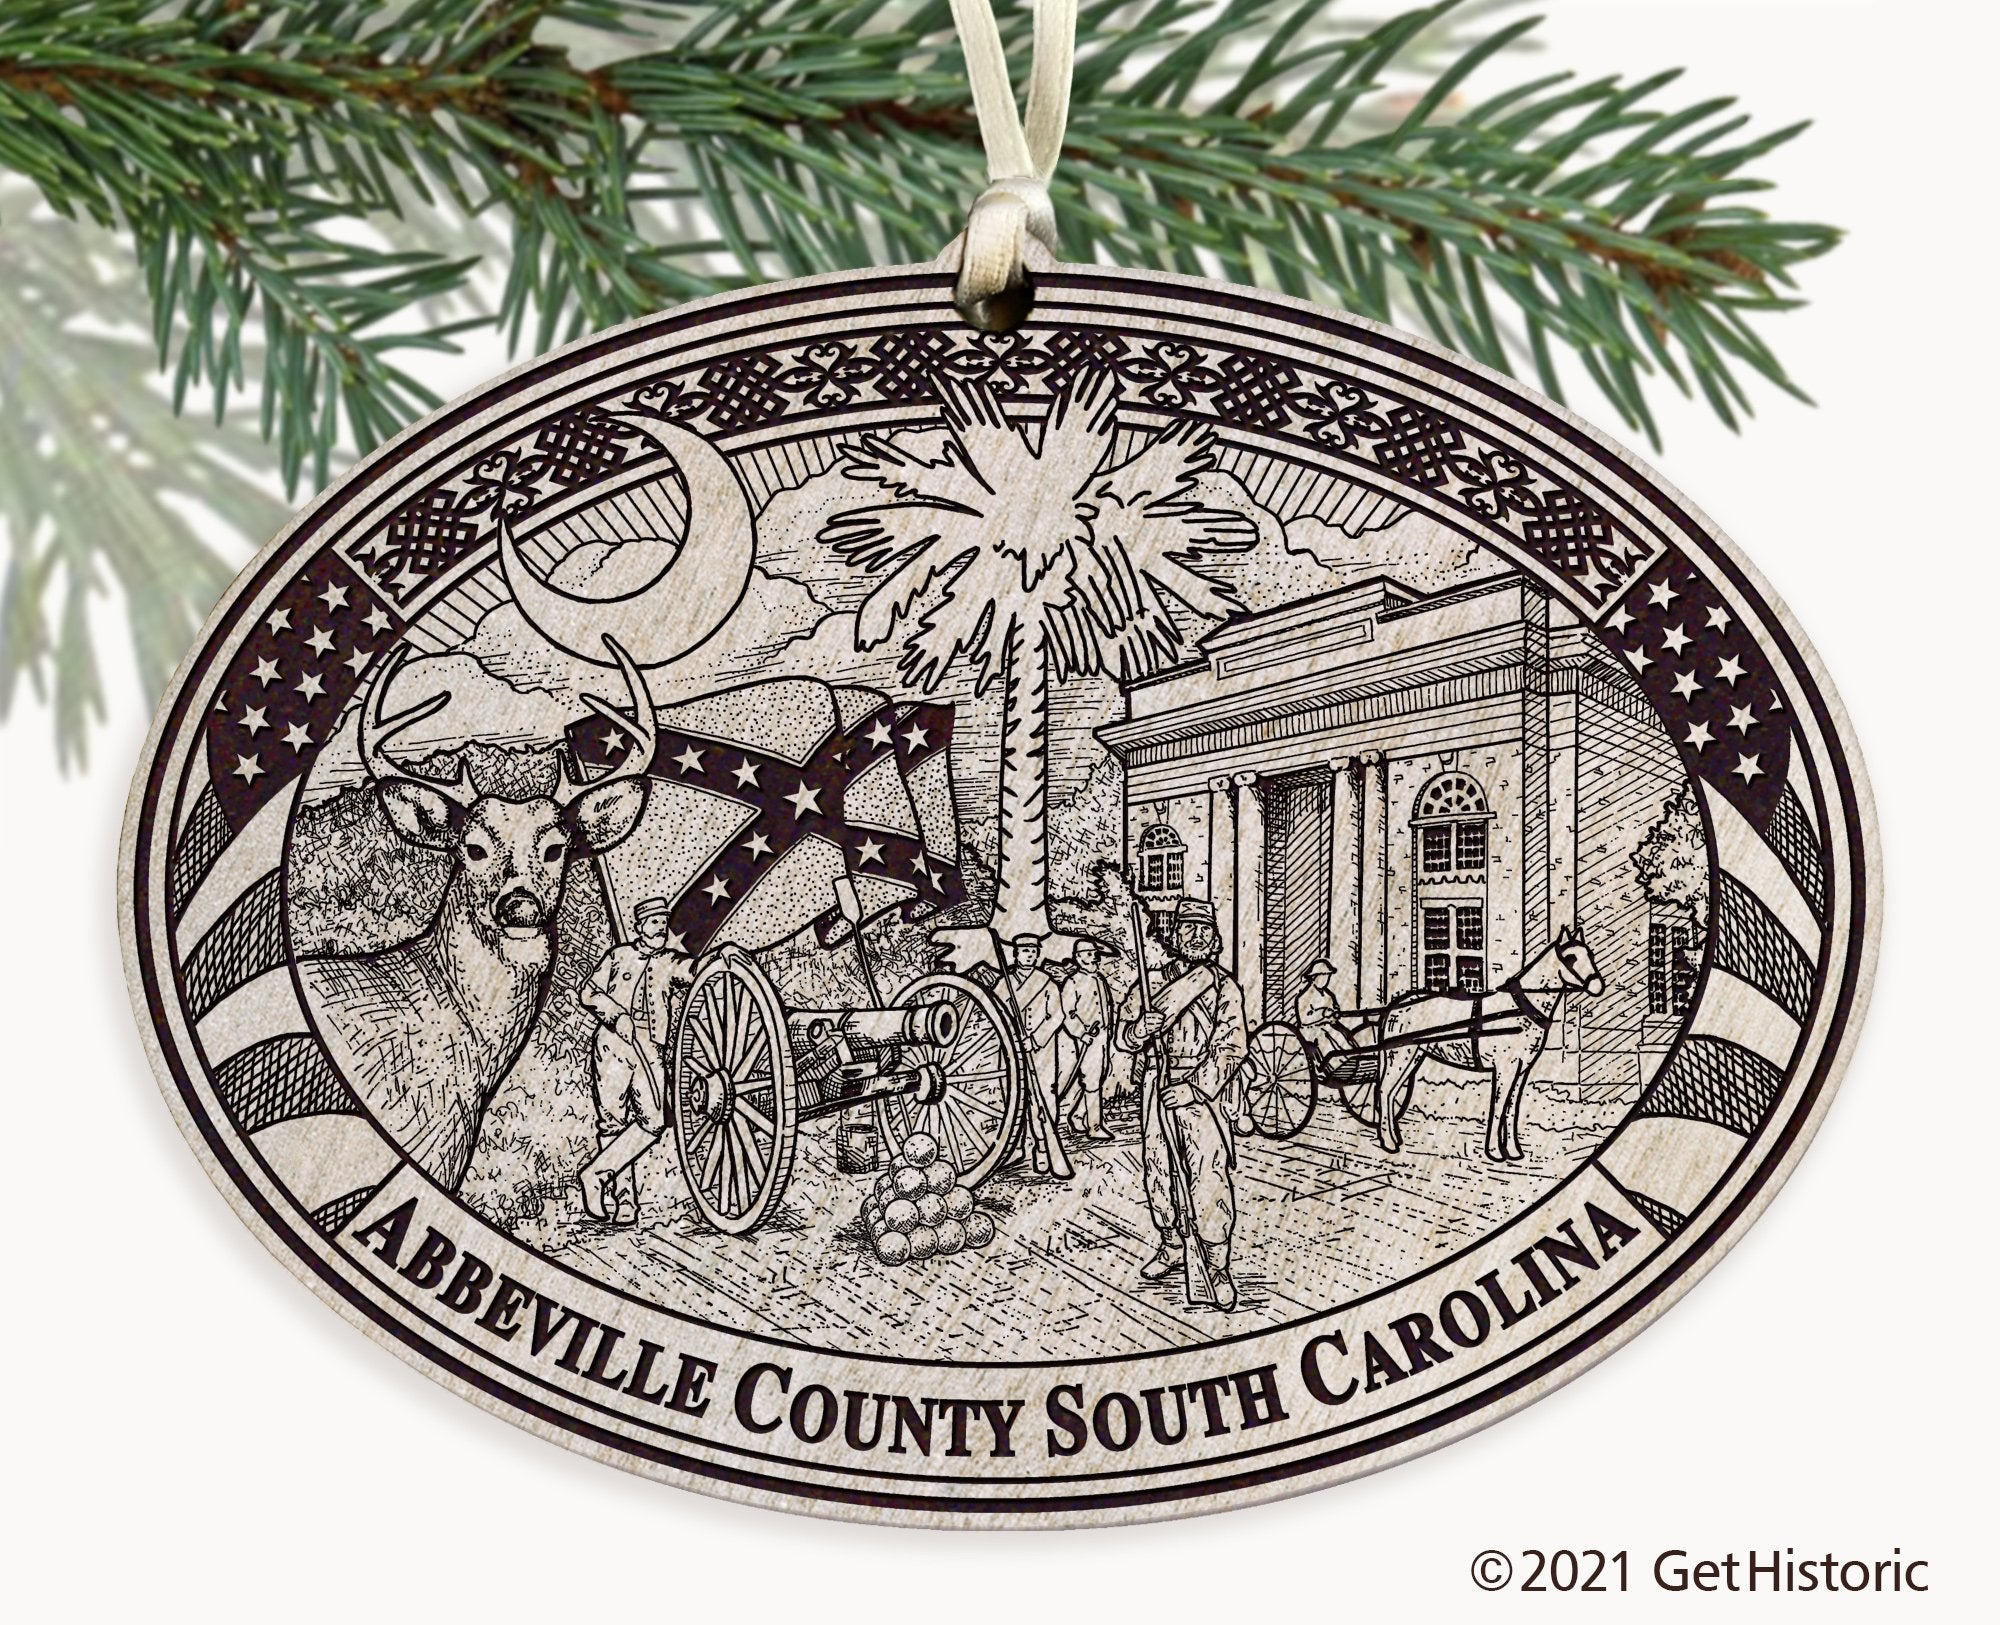 Abbeville County South Carolina Engraved Ornament